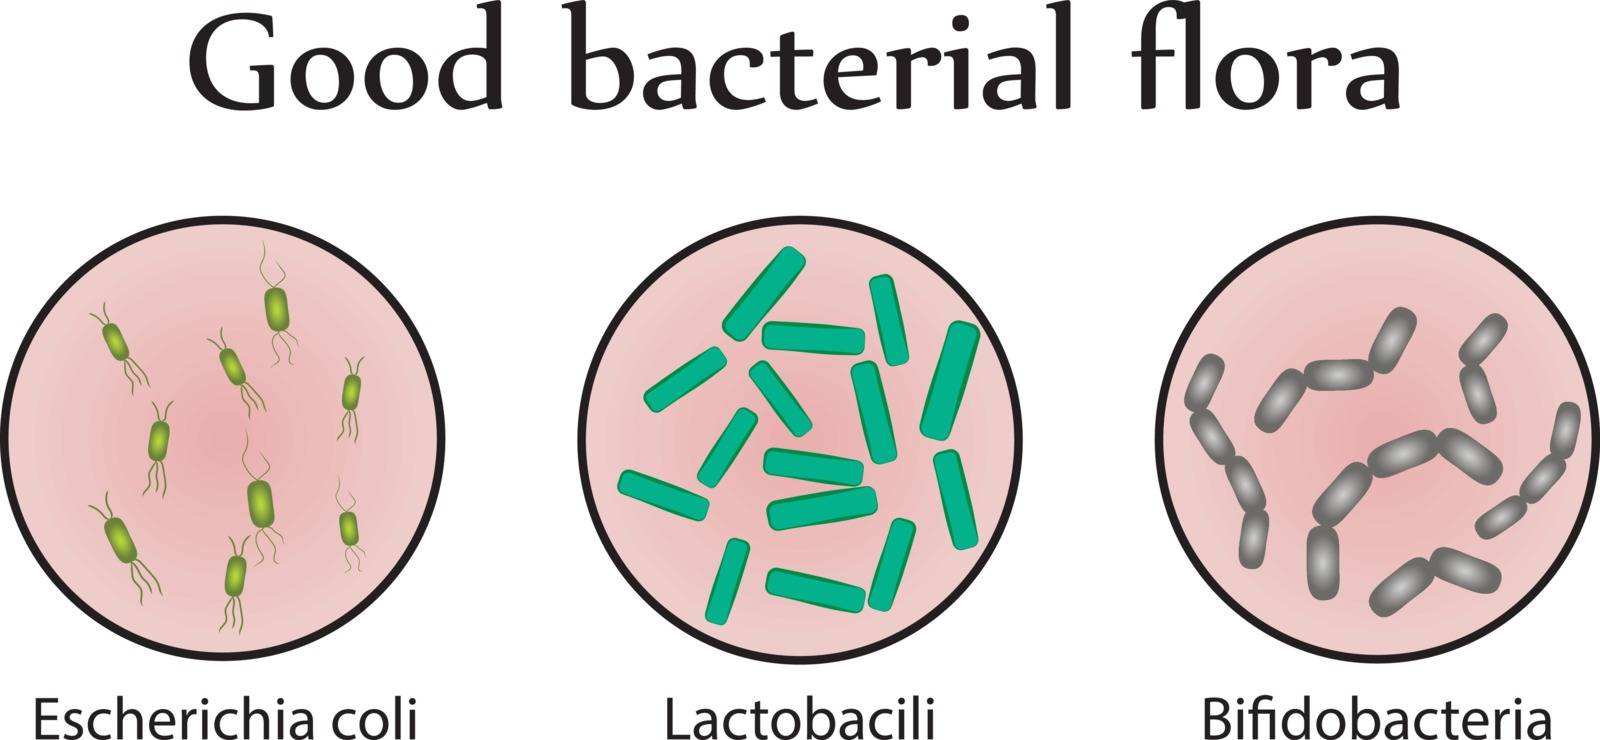 Intestinal bacteria flora. Good bacterial flora. Vector illustration by Olena758